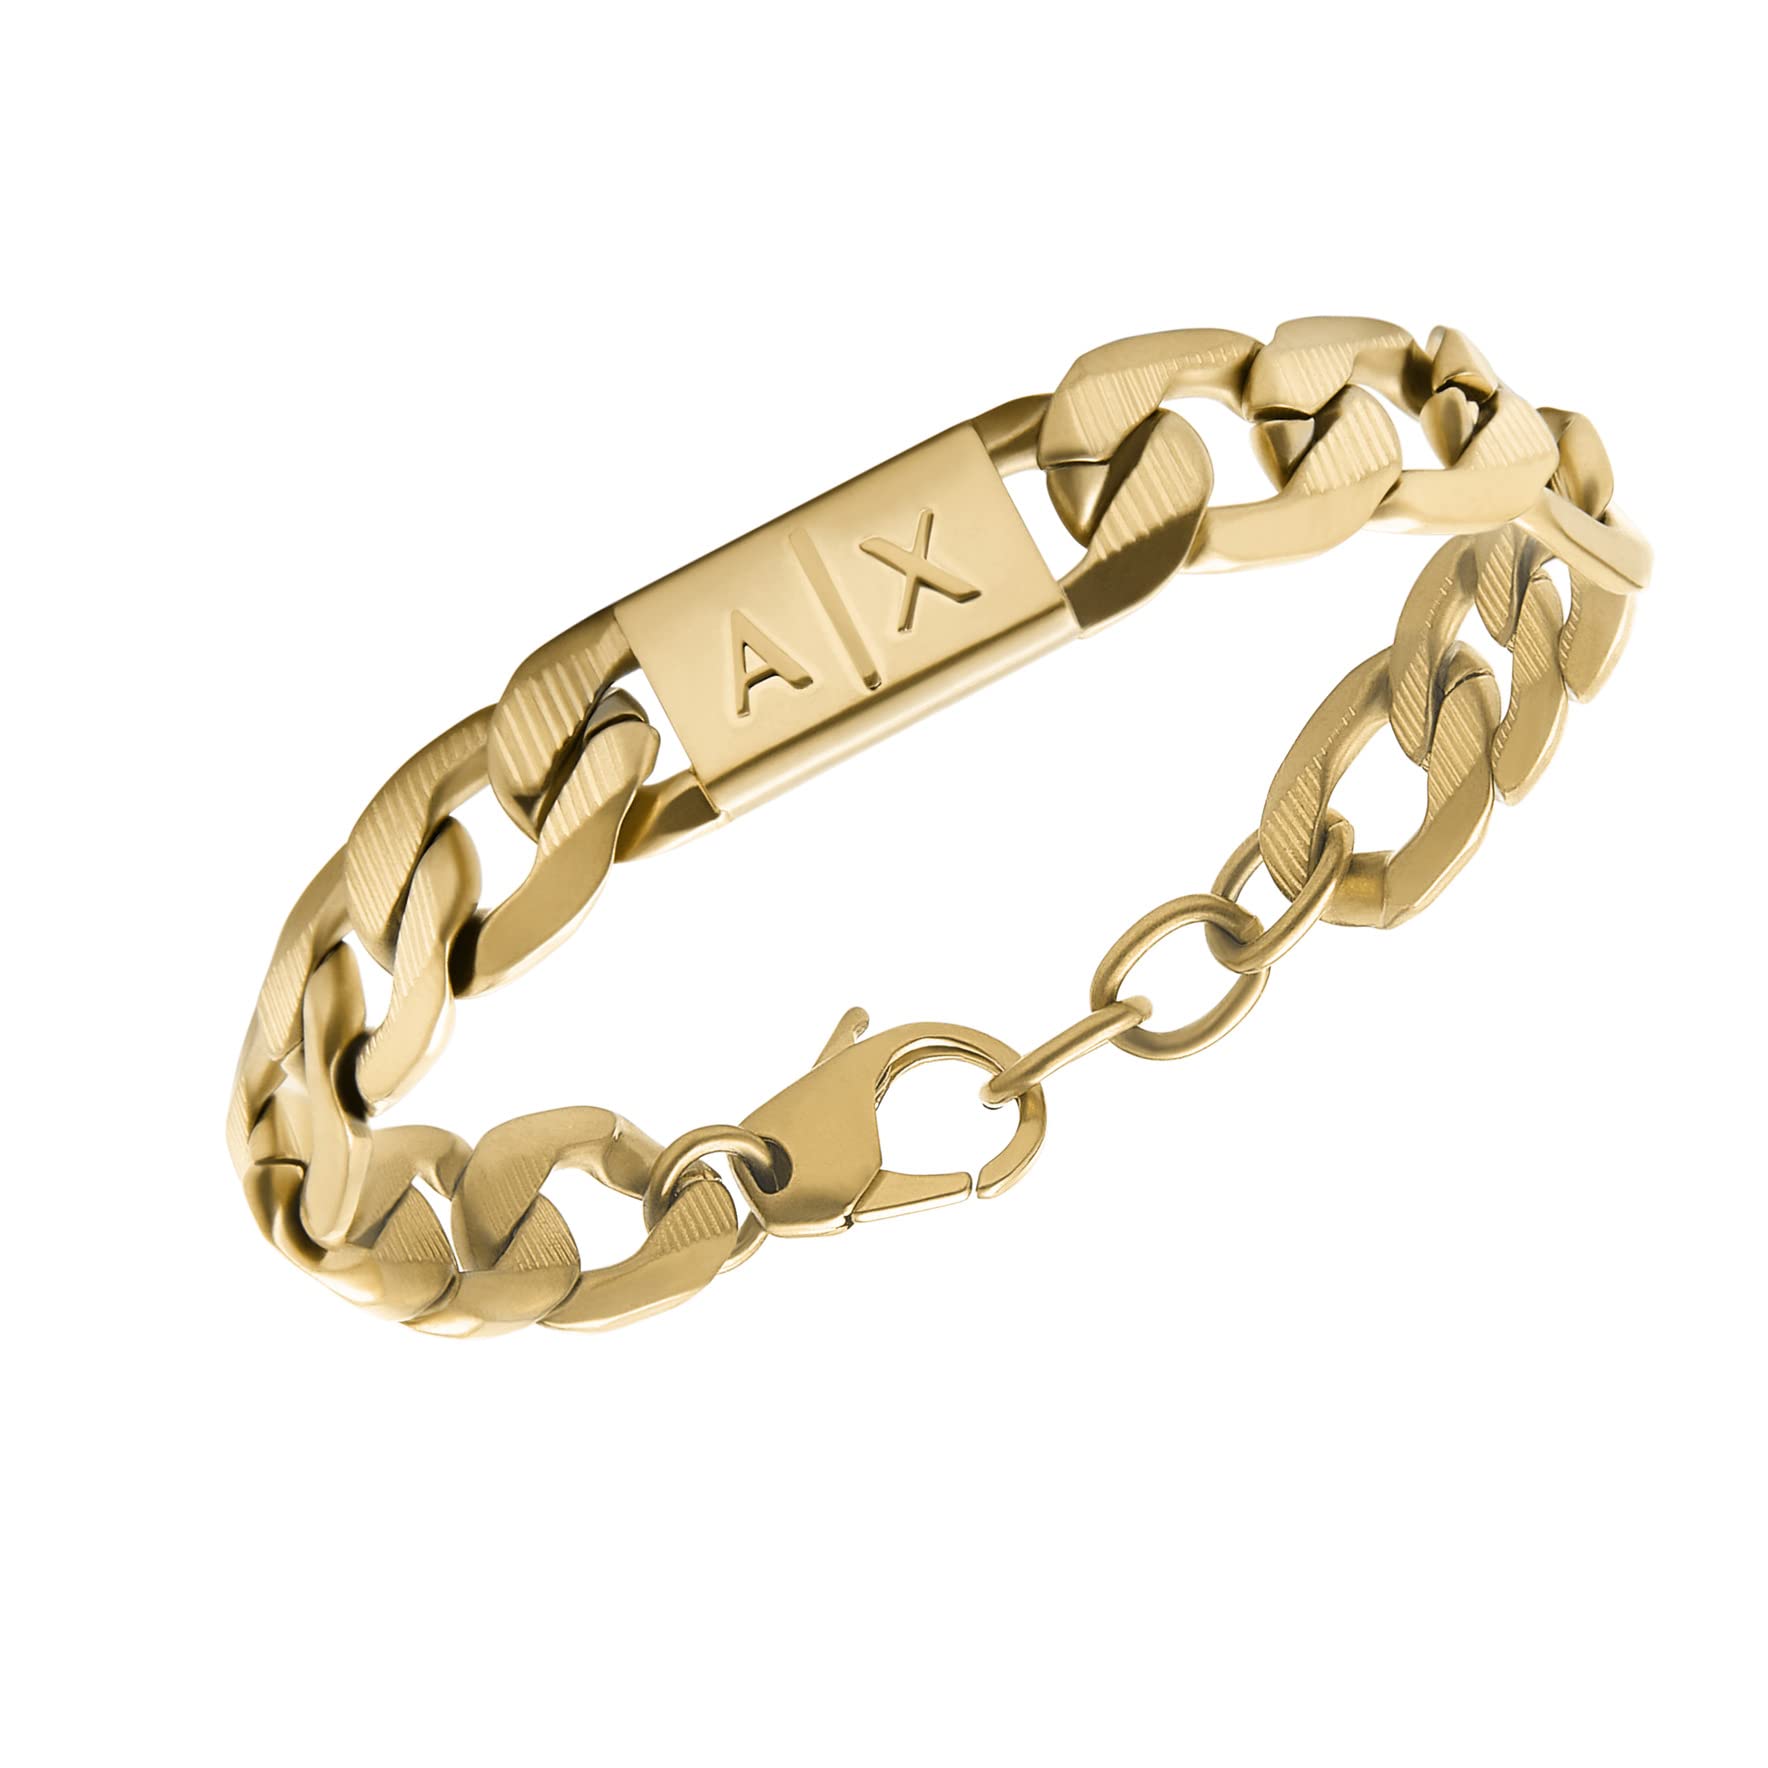 Armani Exchange Stainless Steel Chain Bracelet